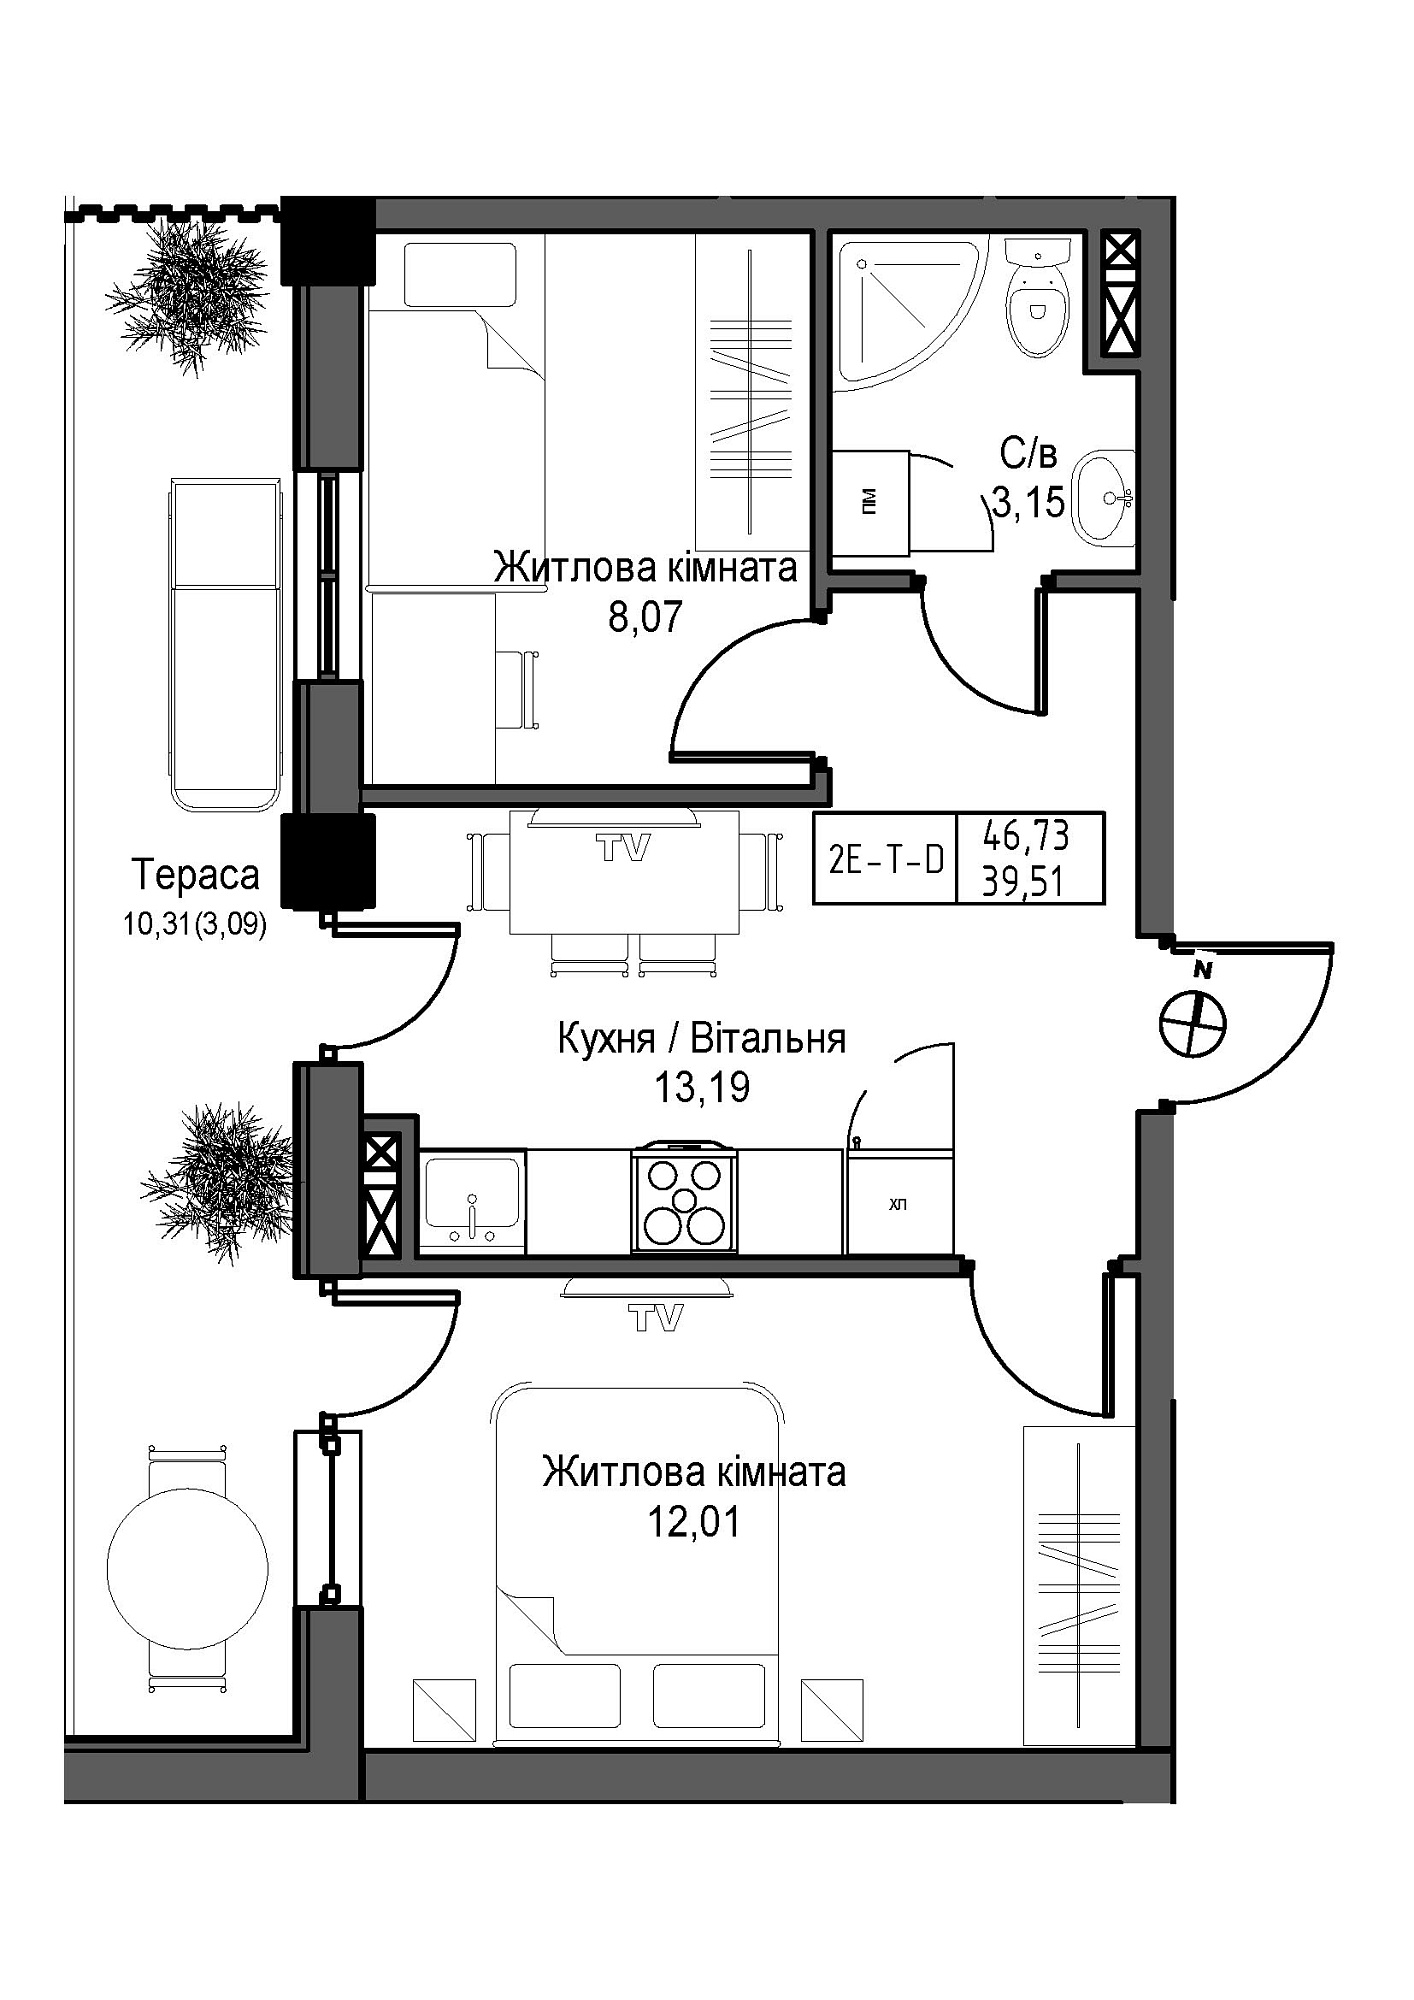 Planning 2-rm flats area 39.51m2, UM-007-09/0001.